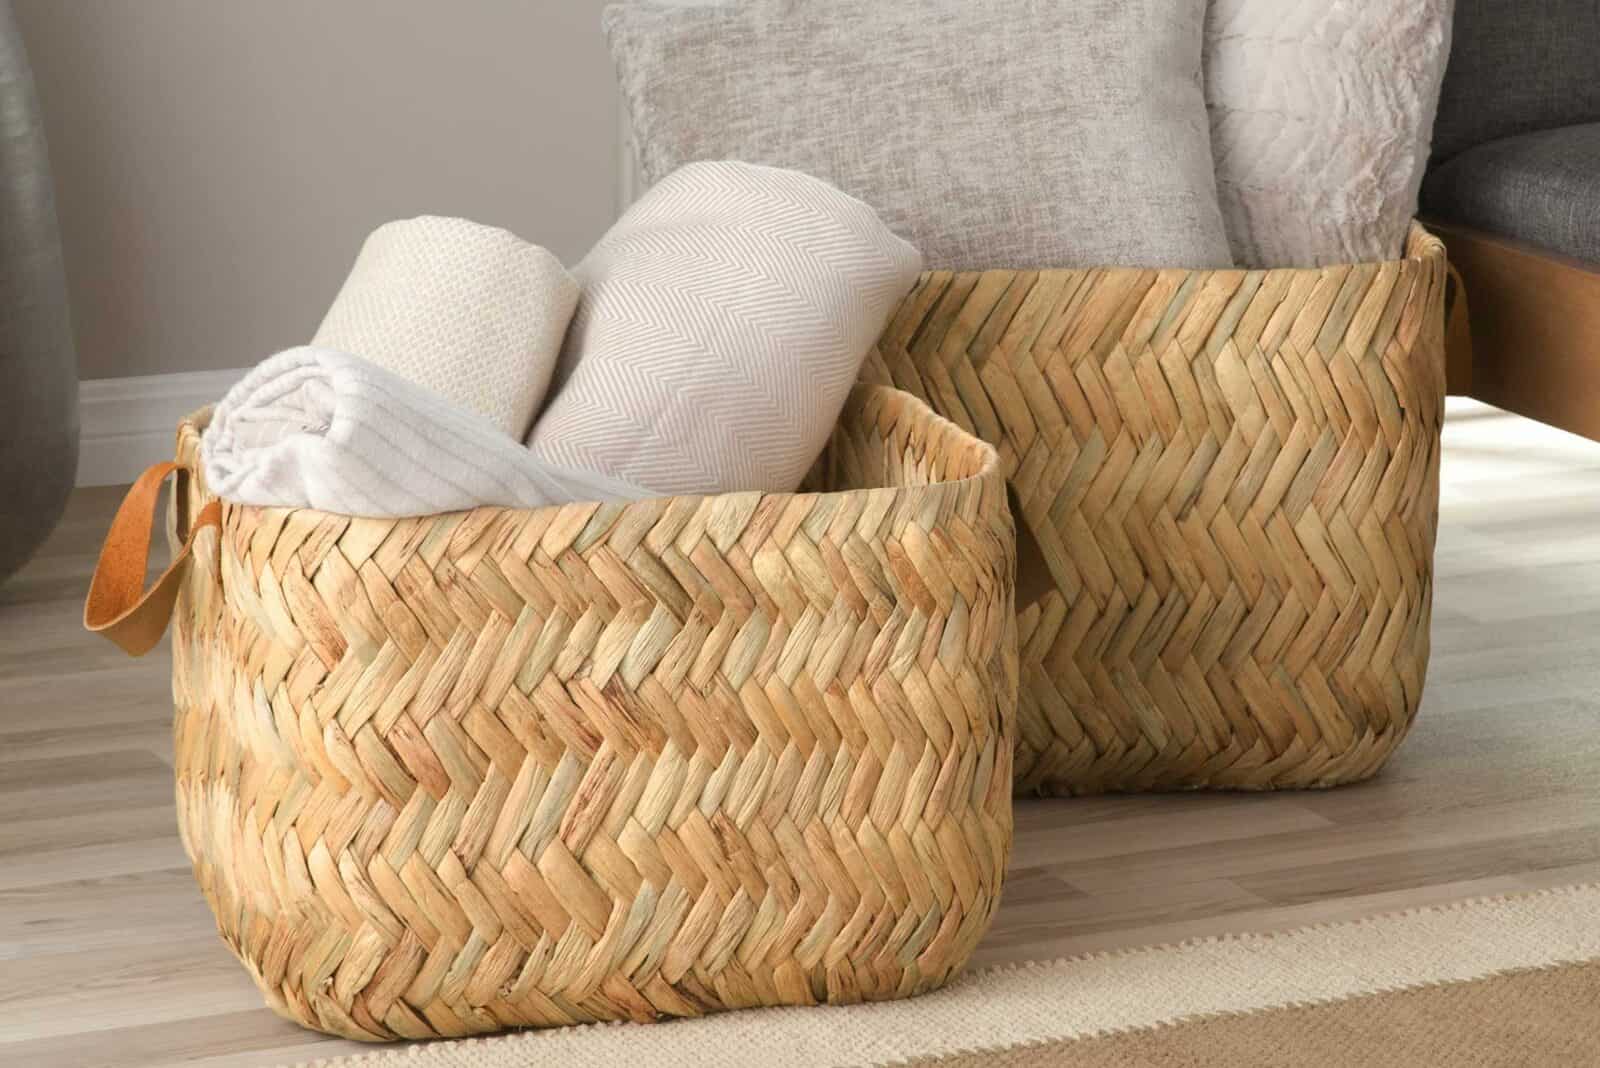 mDesign Narrow Fabric Storage Bin Basket with Handles for Bathroom